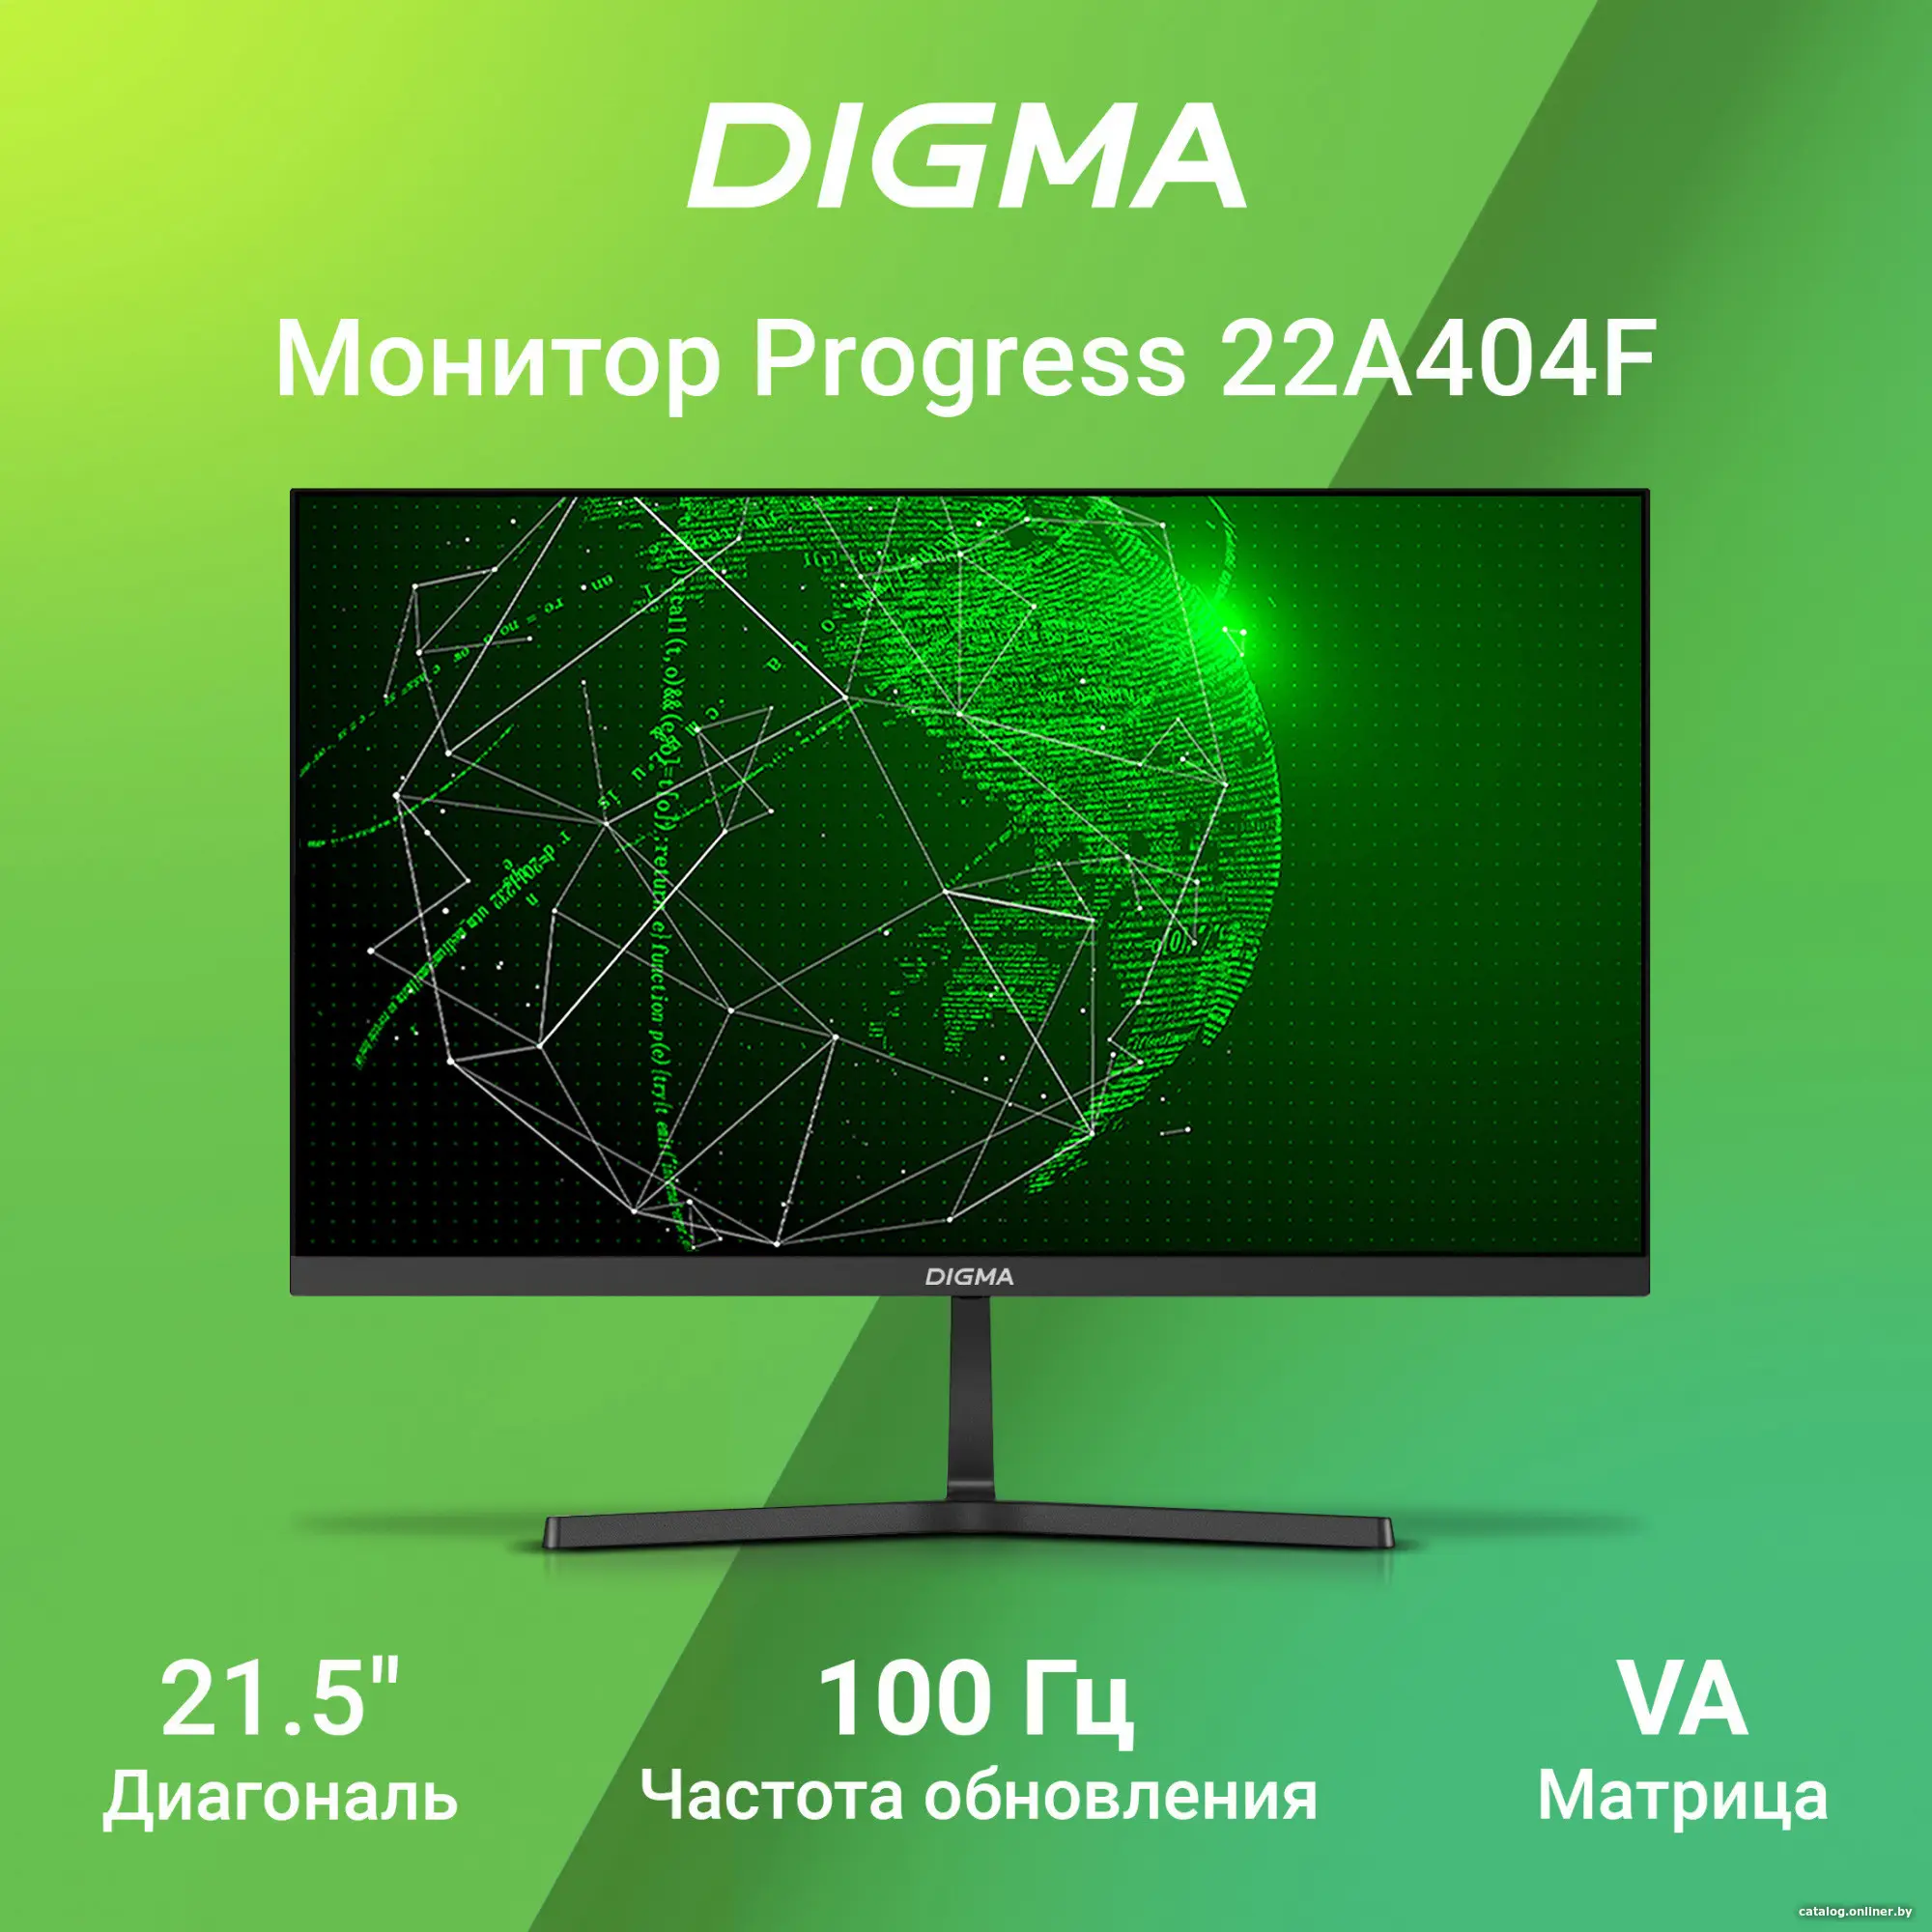 Купить Монитор 21.5`` Digma Progress 22A404F, цена, опт и розница